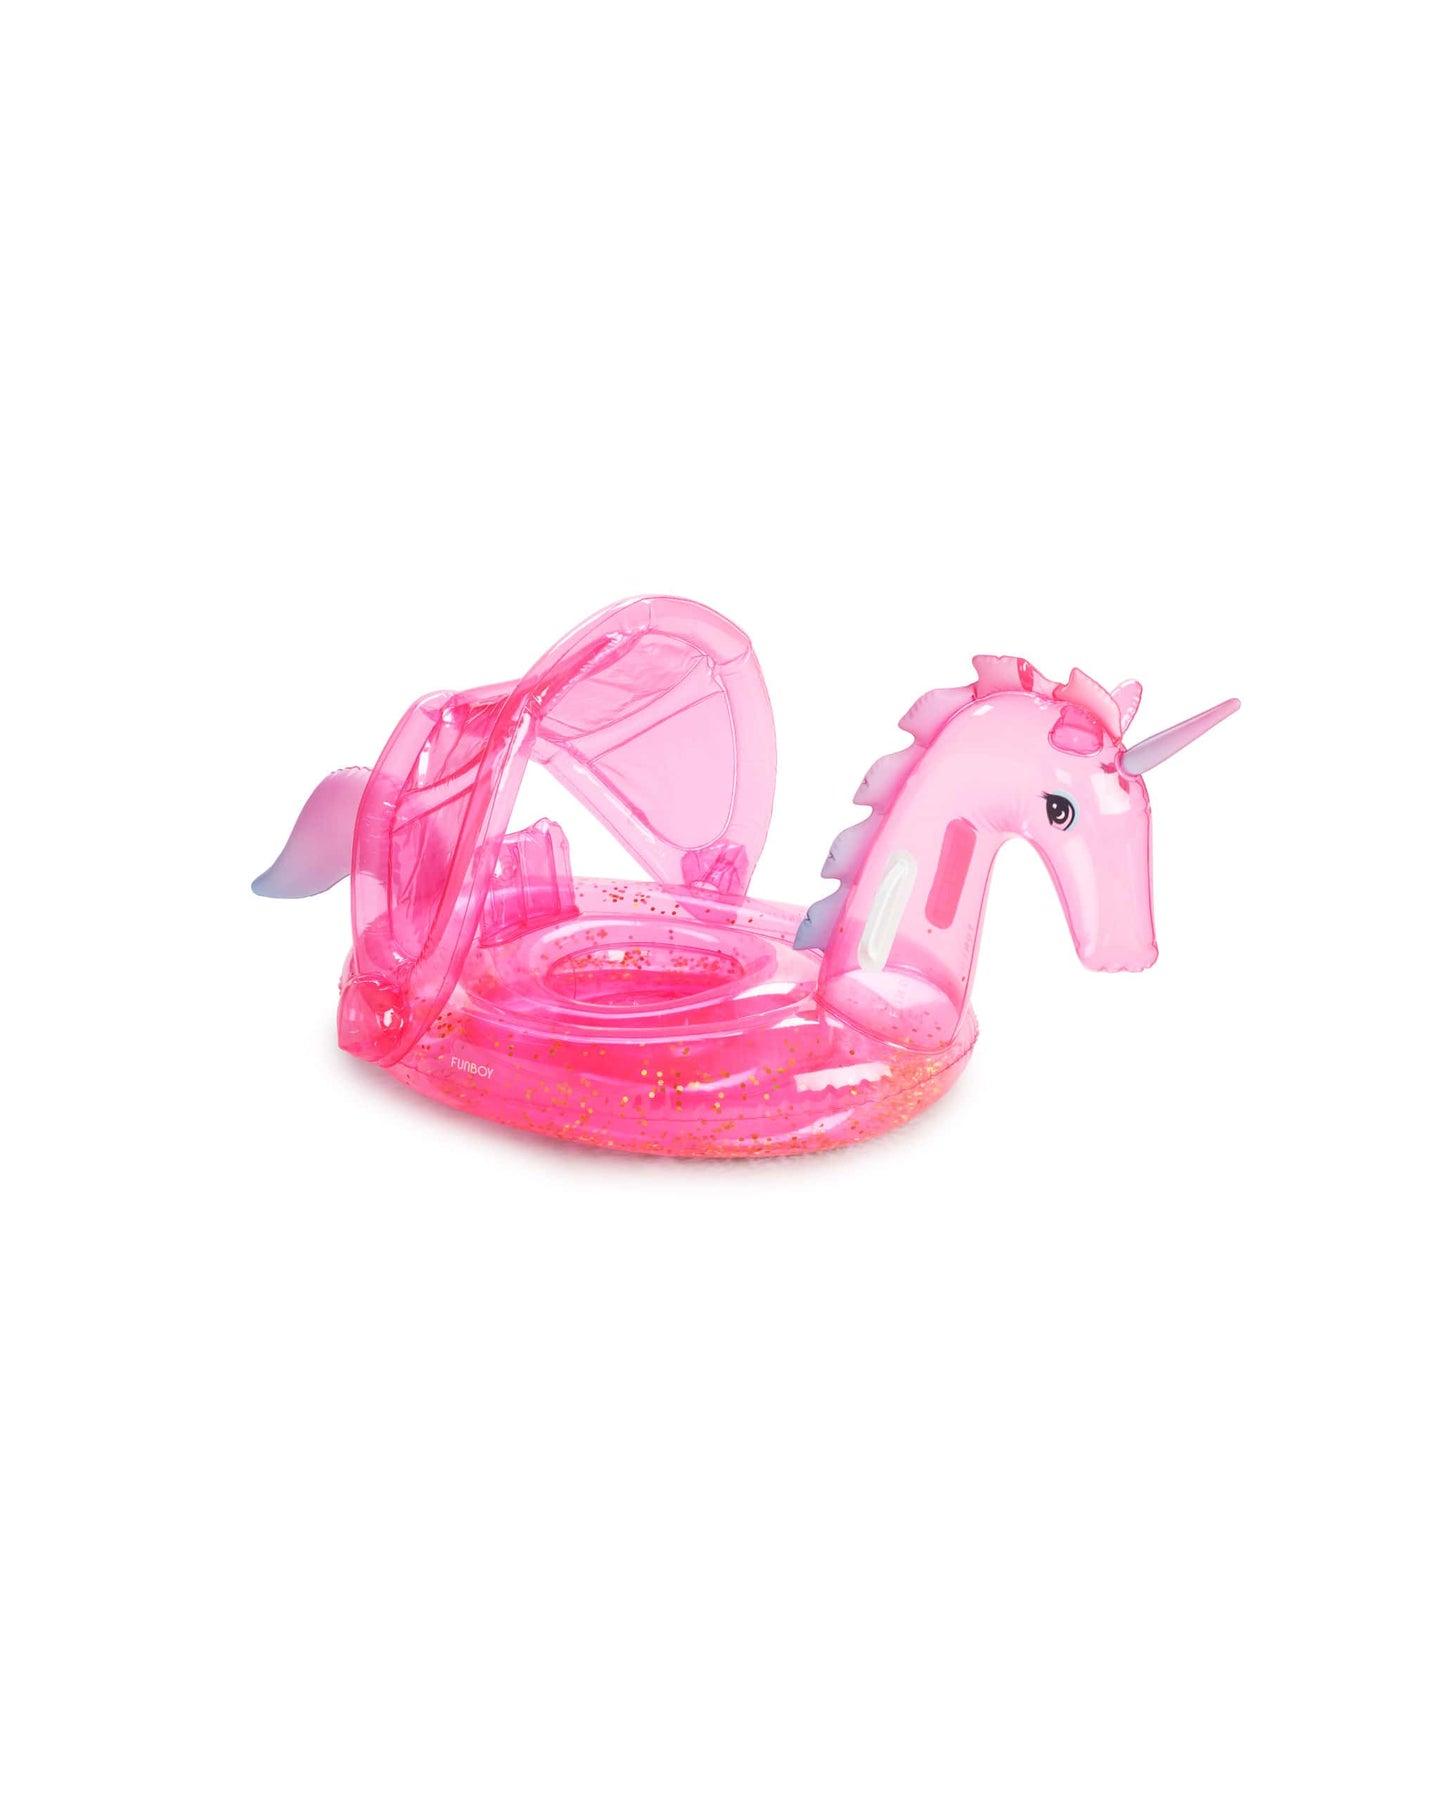 Baby Pool Float w/ Shade - Pink Unicorn